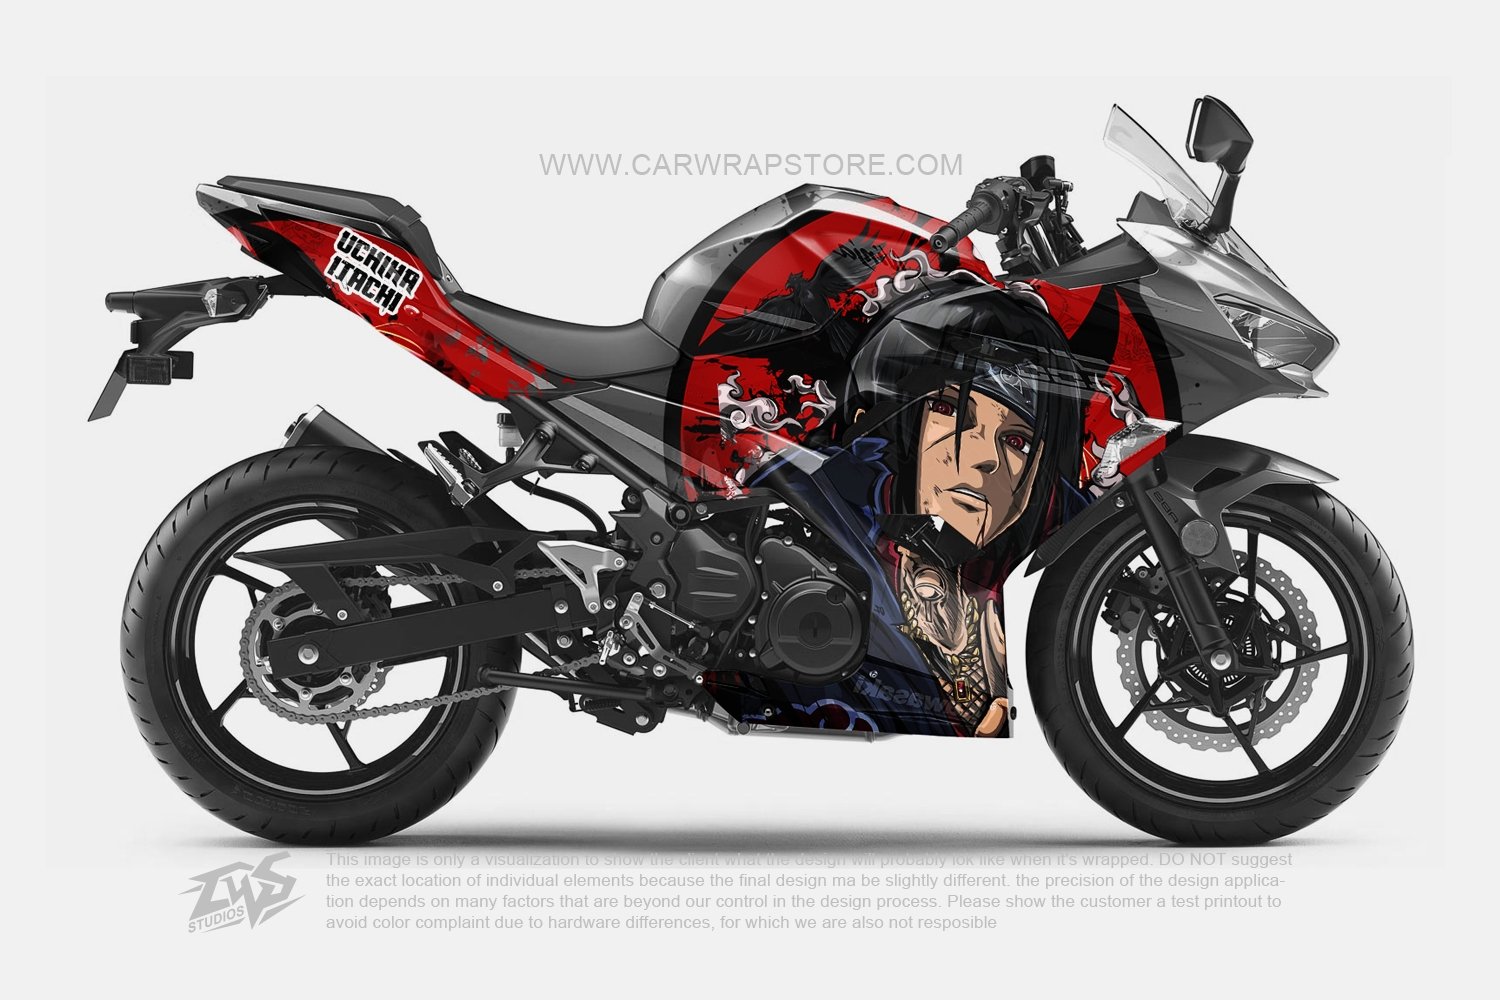 Motorcycle graphics, Bike wrap design, Full motorcycle wrap, Wrap for bikes